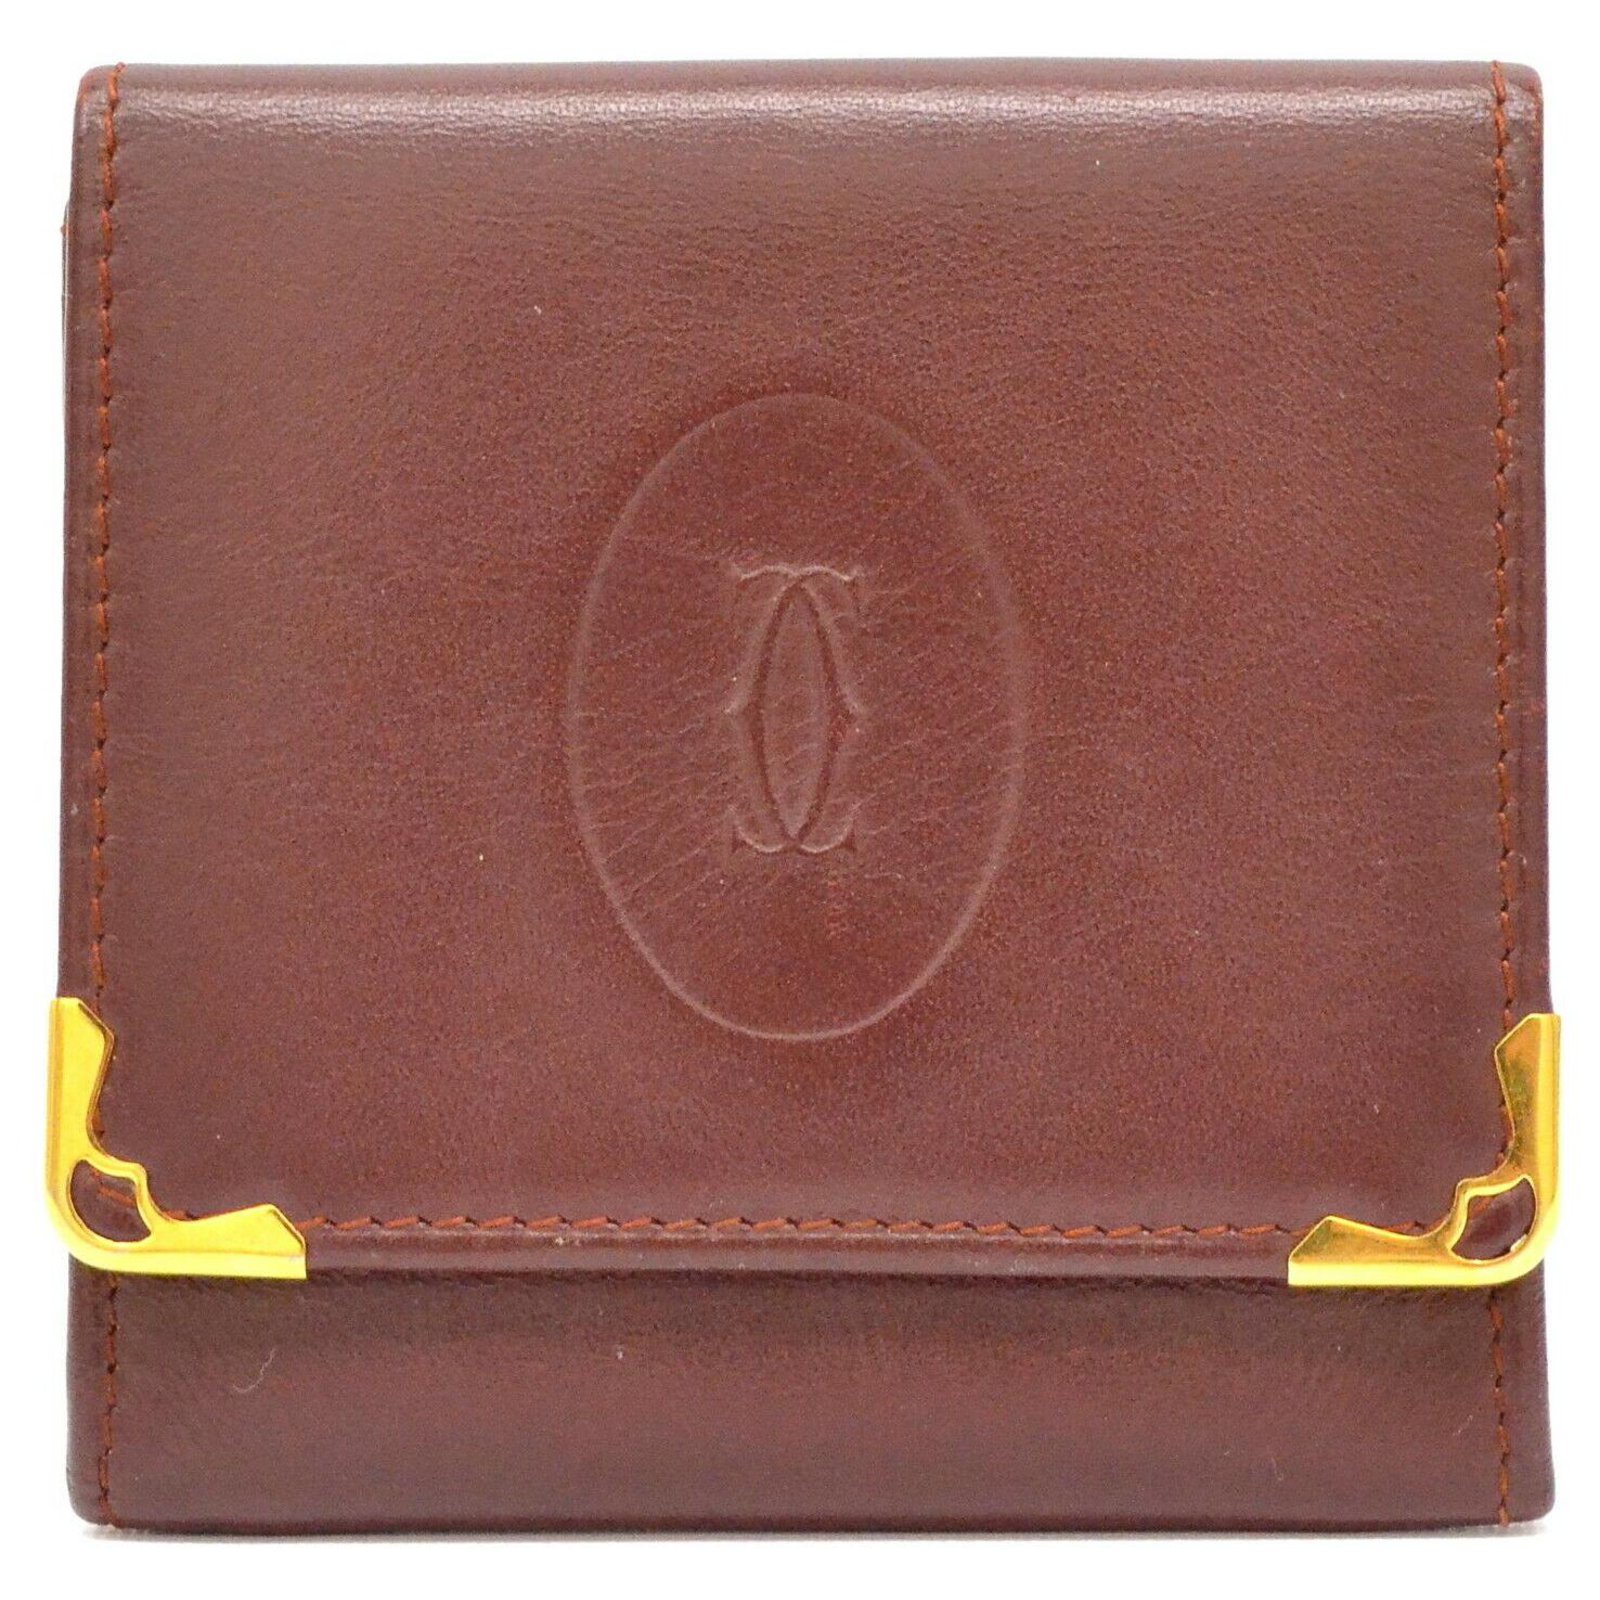 cartier compact wallet